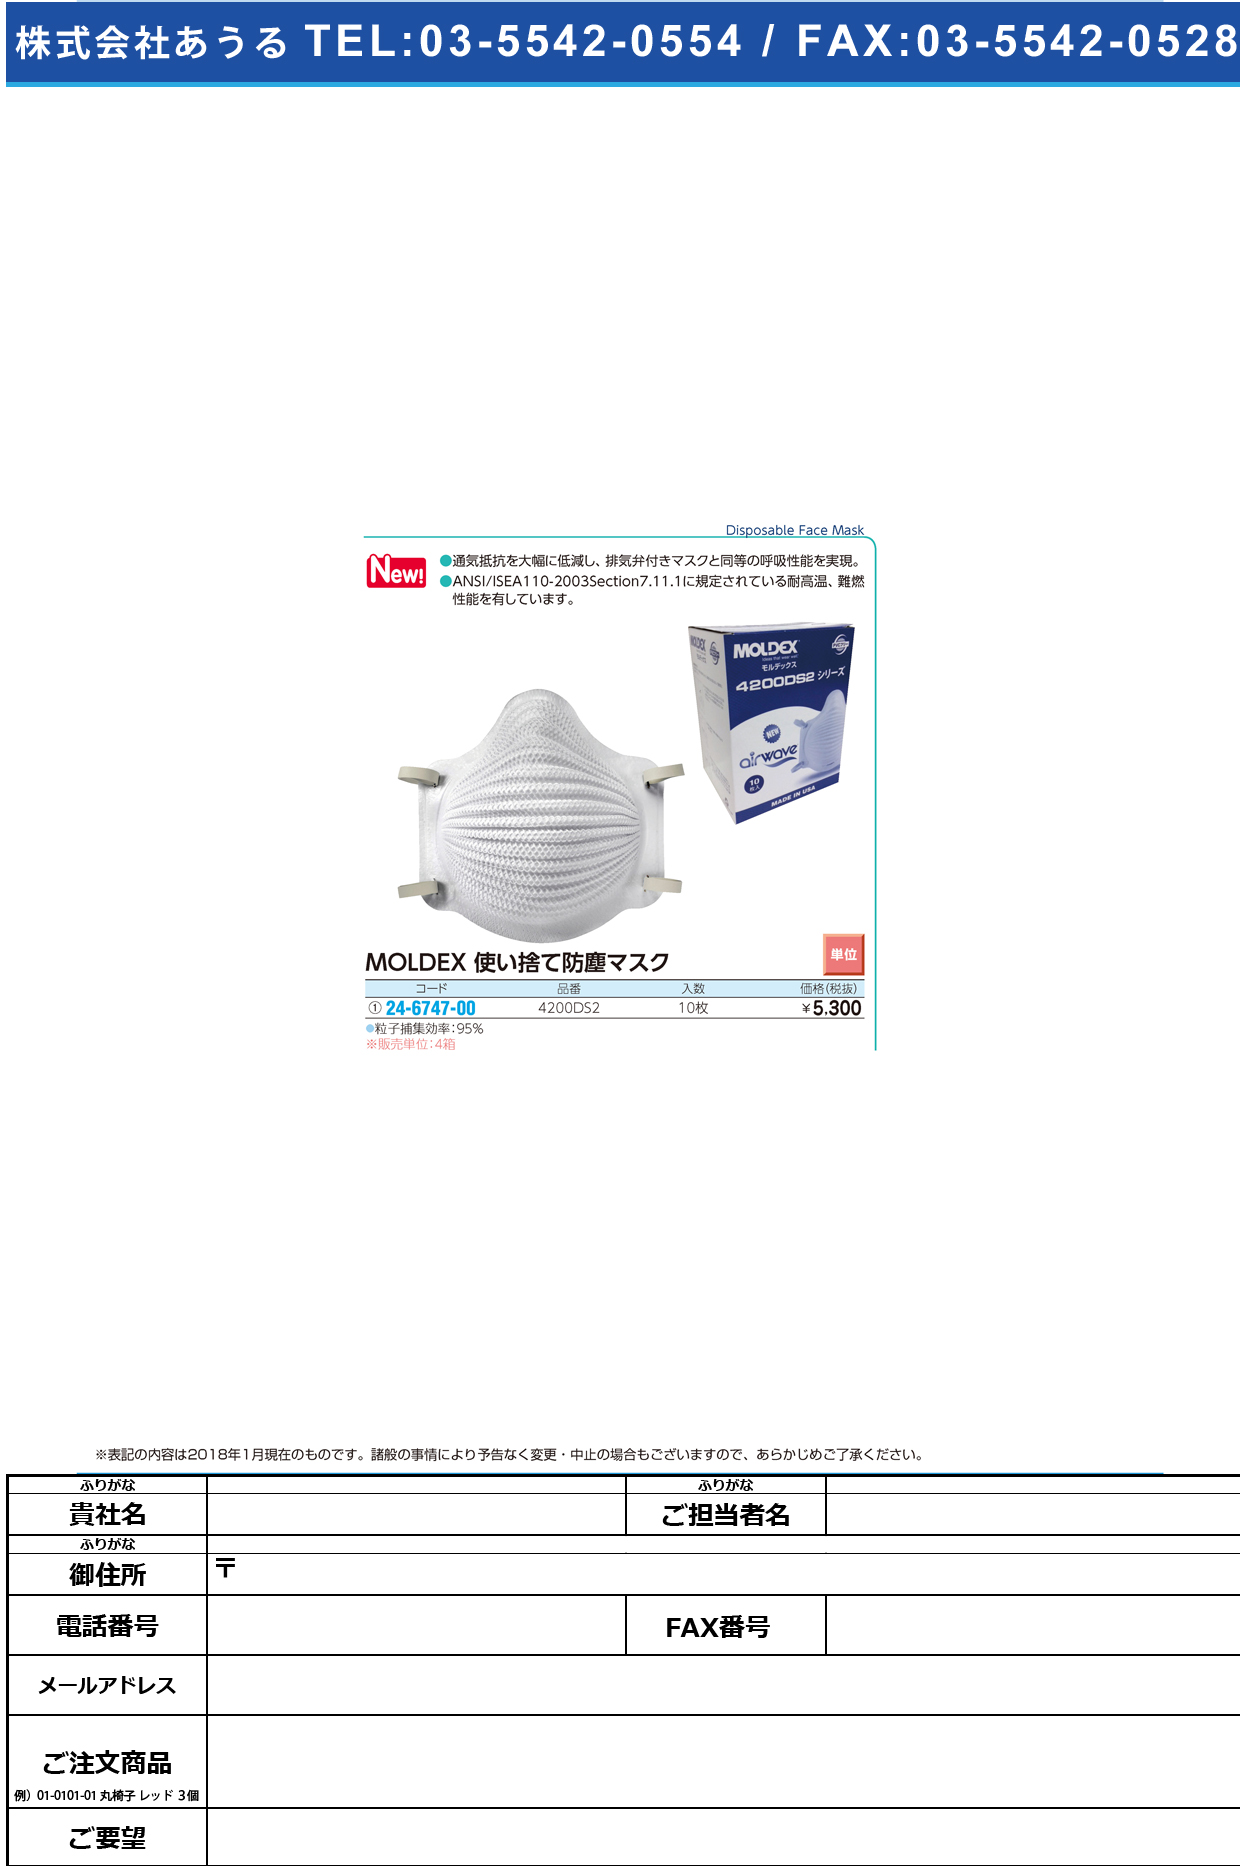 ＭＯＬＤＥＸ使い捨て防塵マスク 4200DS2(10ﾏｲｲﾘ) MOLDEXﾂｶｲｽﾃﾎﾞｳｼﾞﾝﾏｽｸ(ビー・エム・シー)